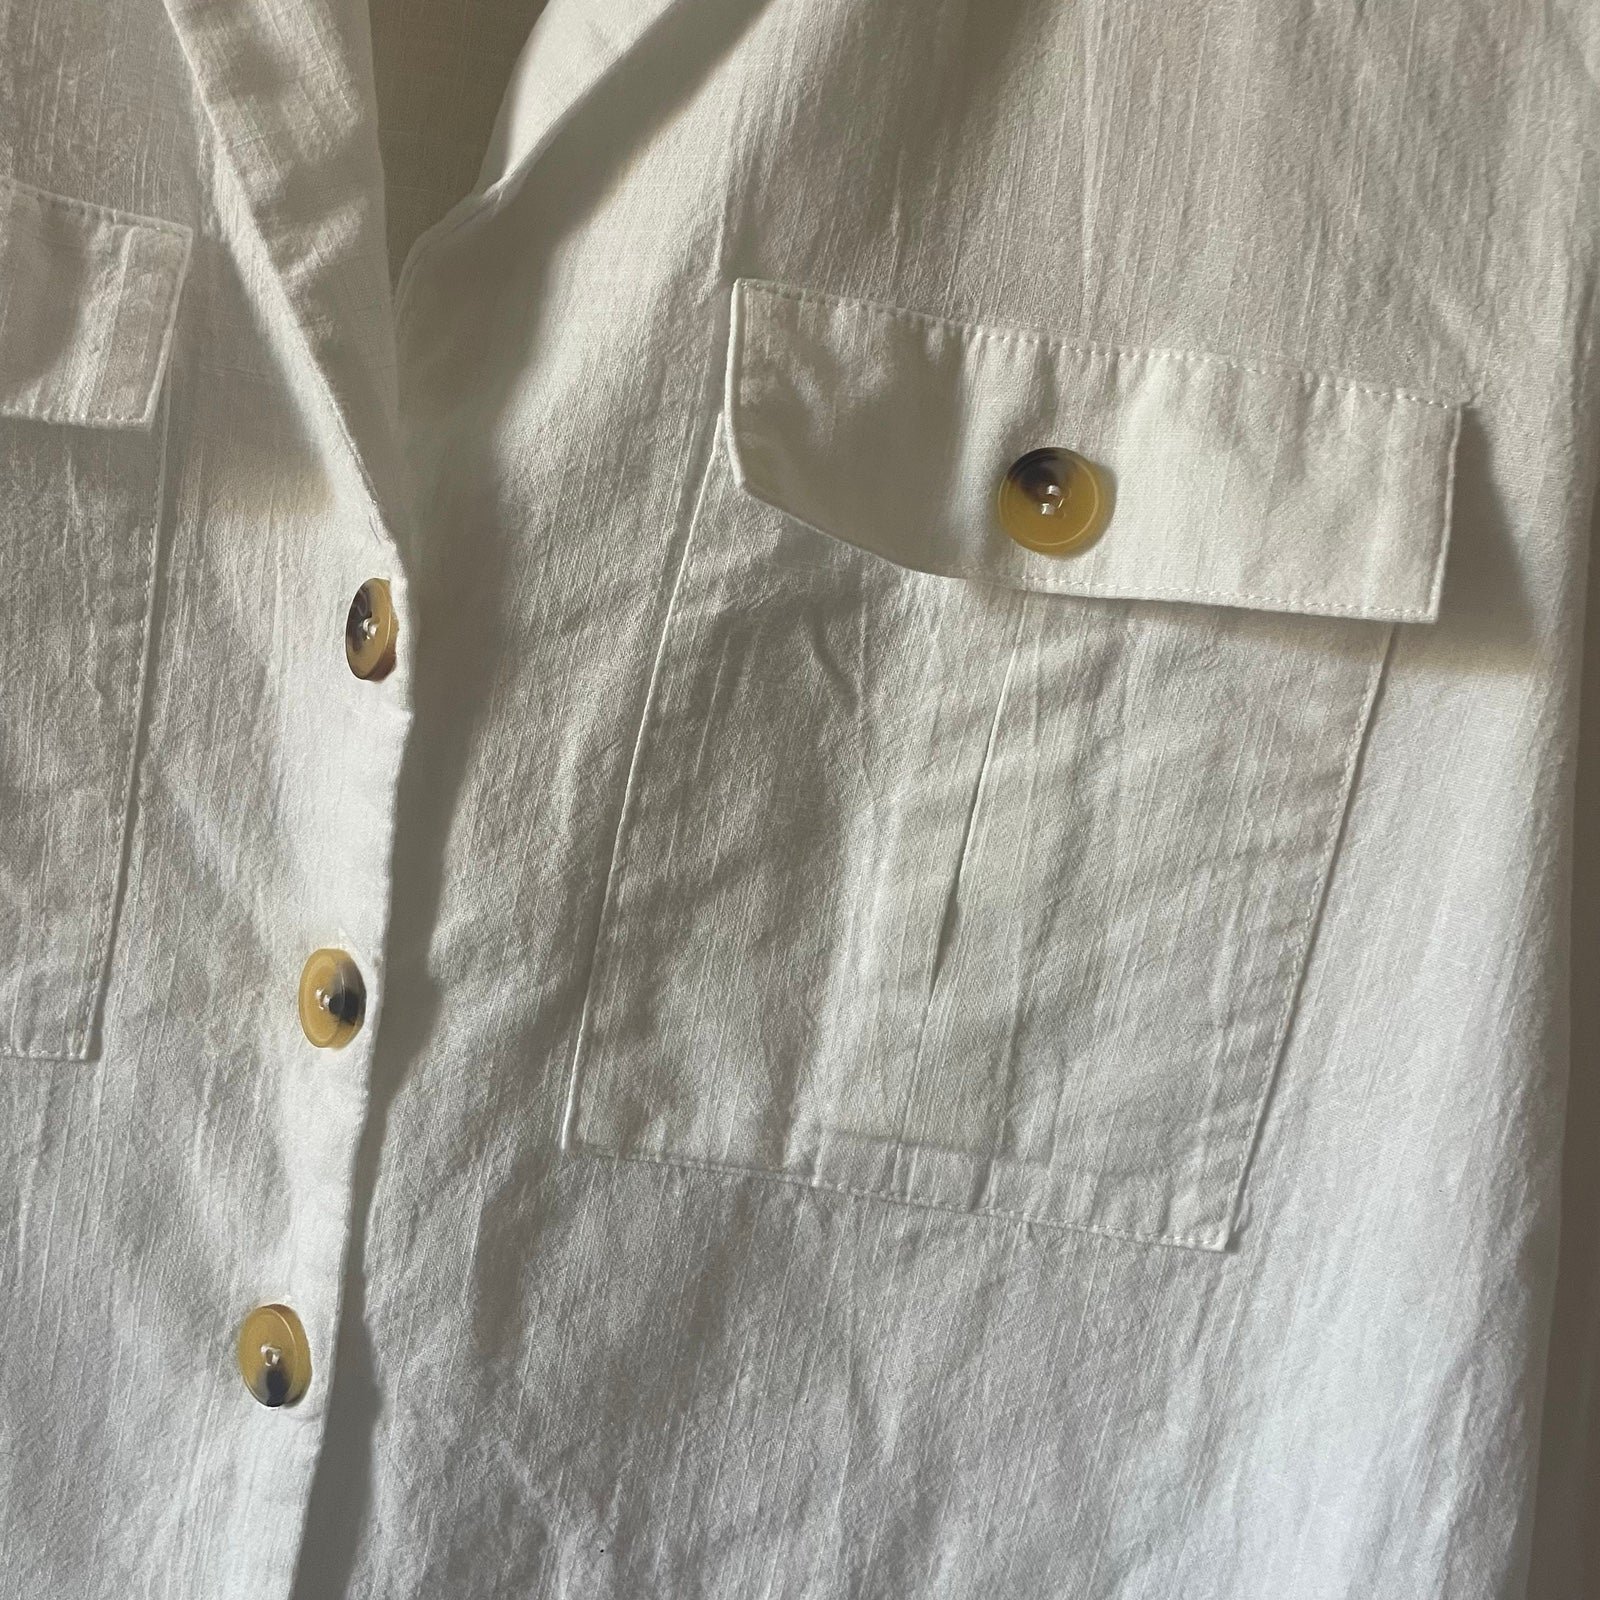 Perfect White cotton button up shirt ONURDAwOS High Quaity